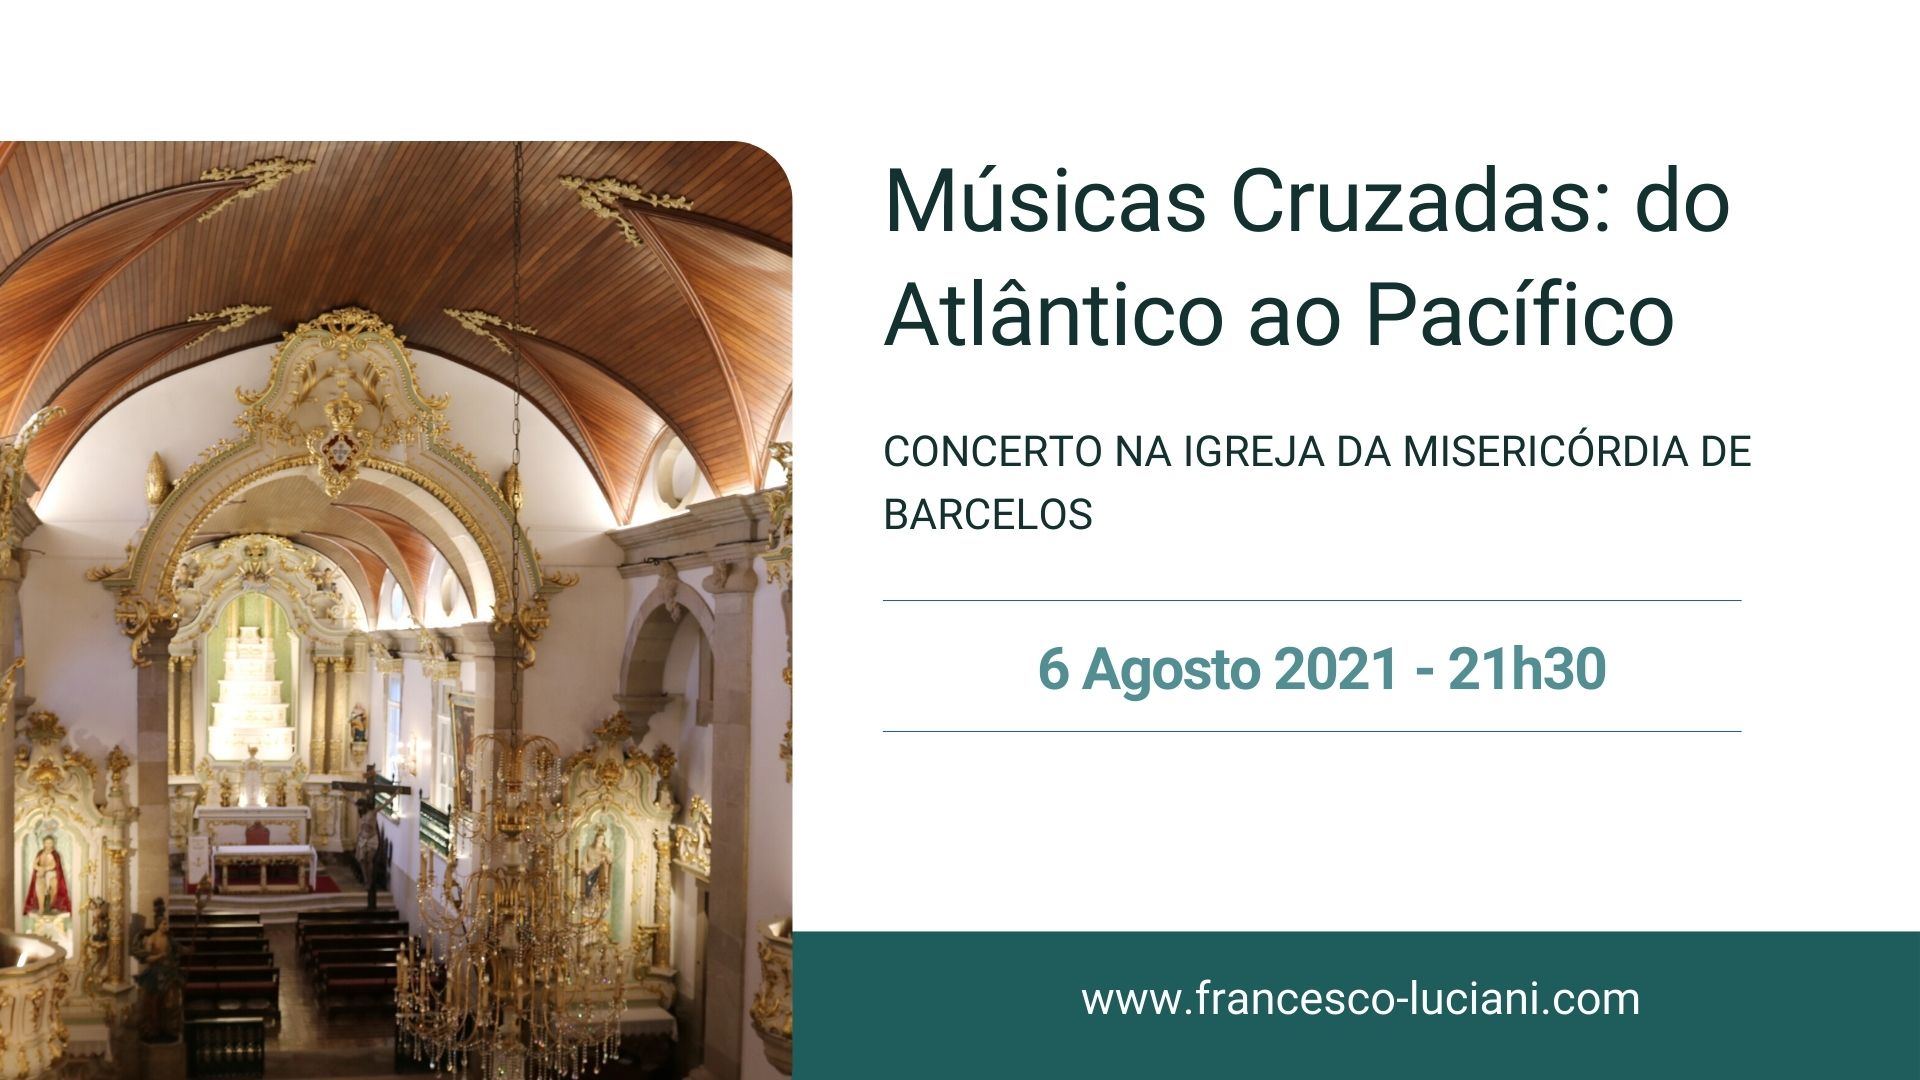 Concerto Igreja da Misericórdia de Barcelos - 6 Agosto 2021 - Guitarrista Francesco Luciani